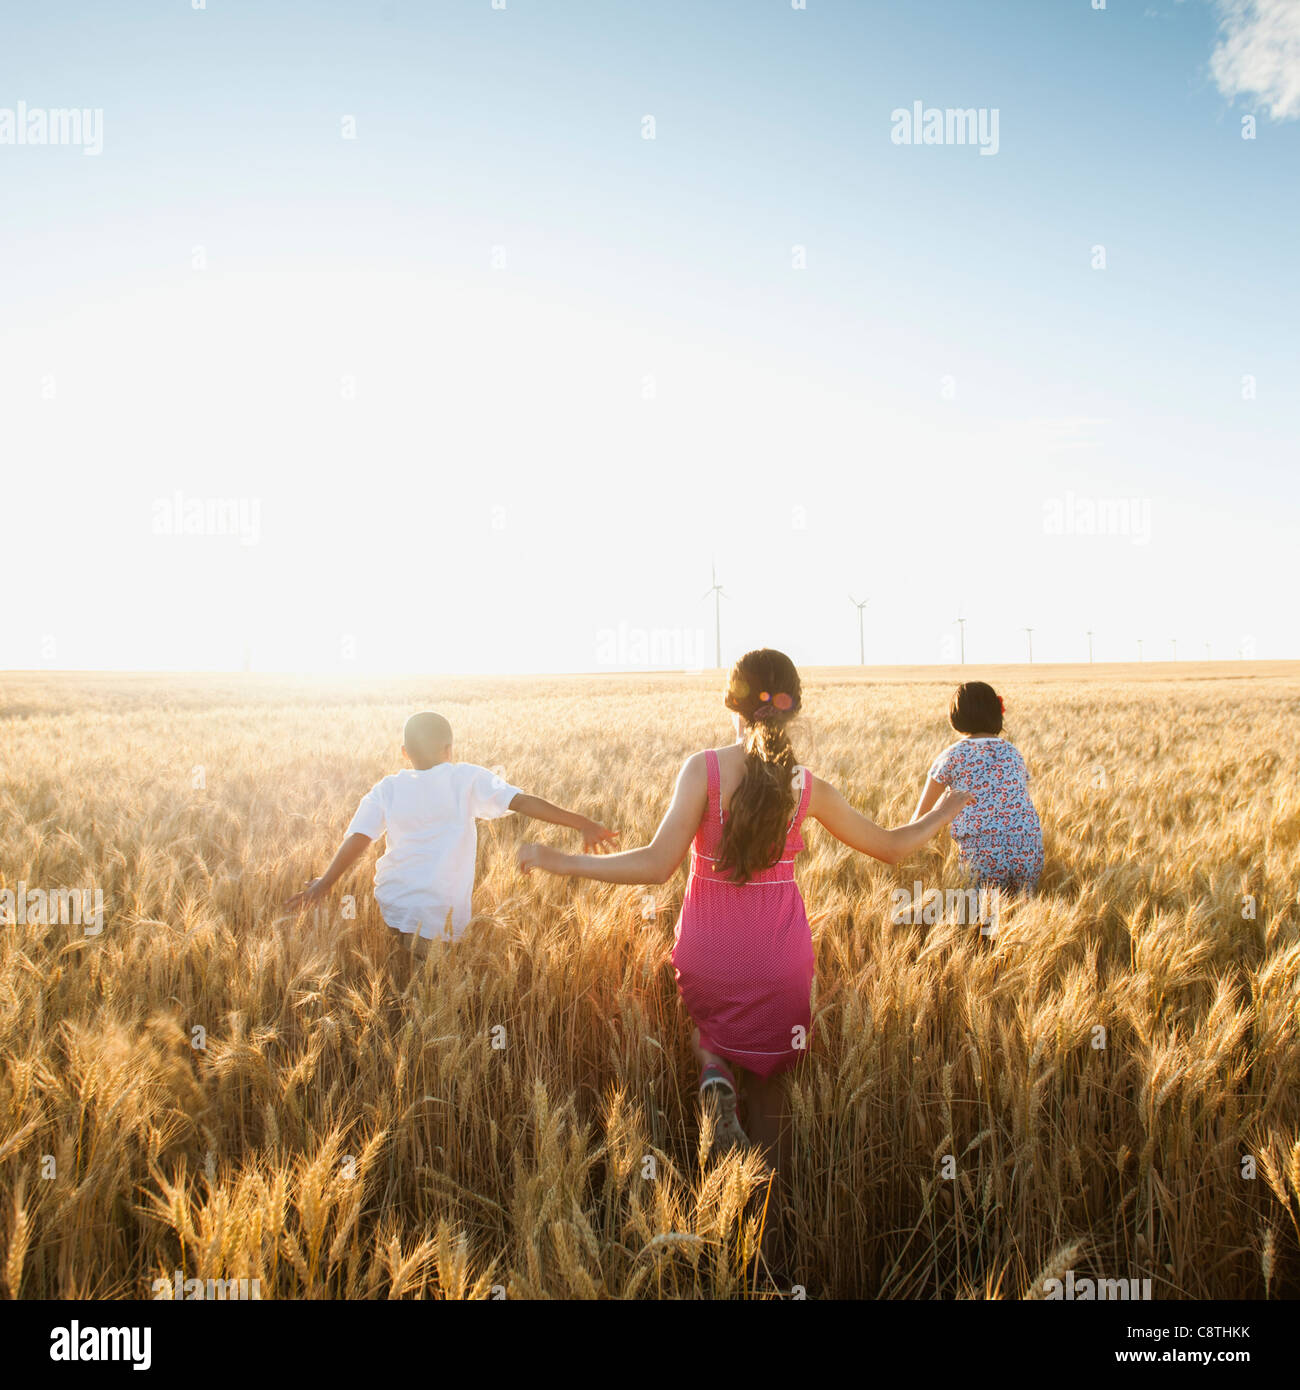 USA, Oregon, Wasco, Girls and boy walking though wheat field Stock Photo